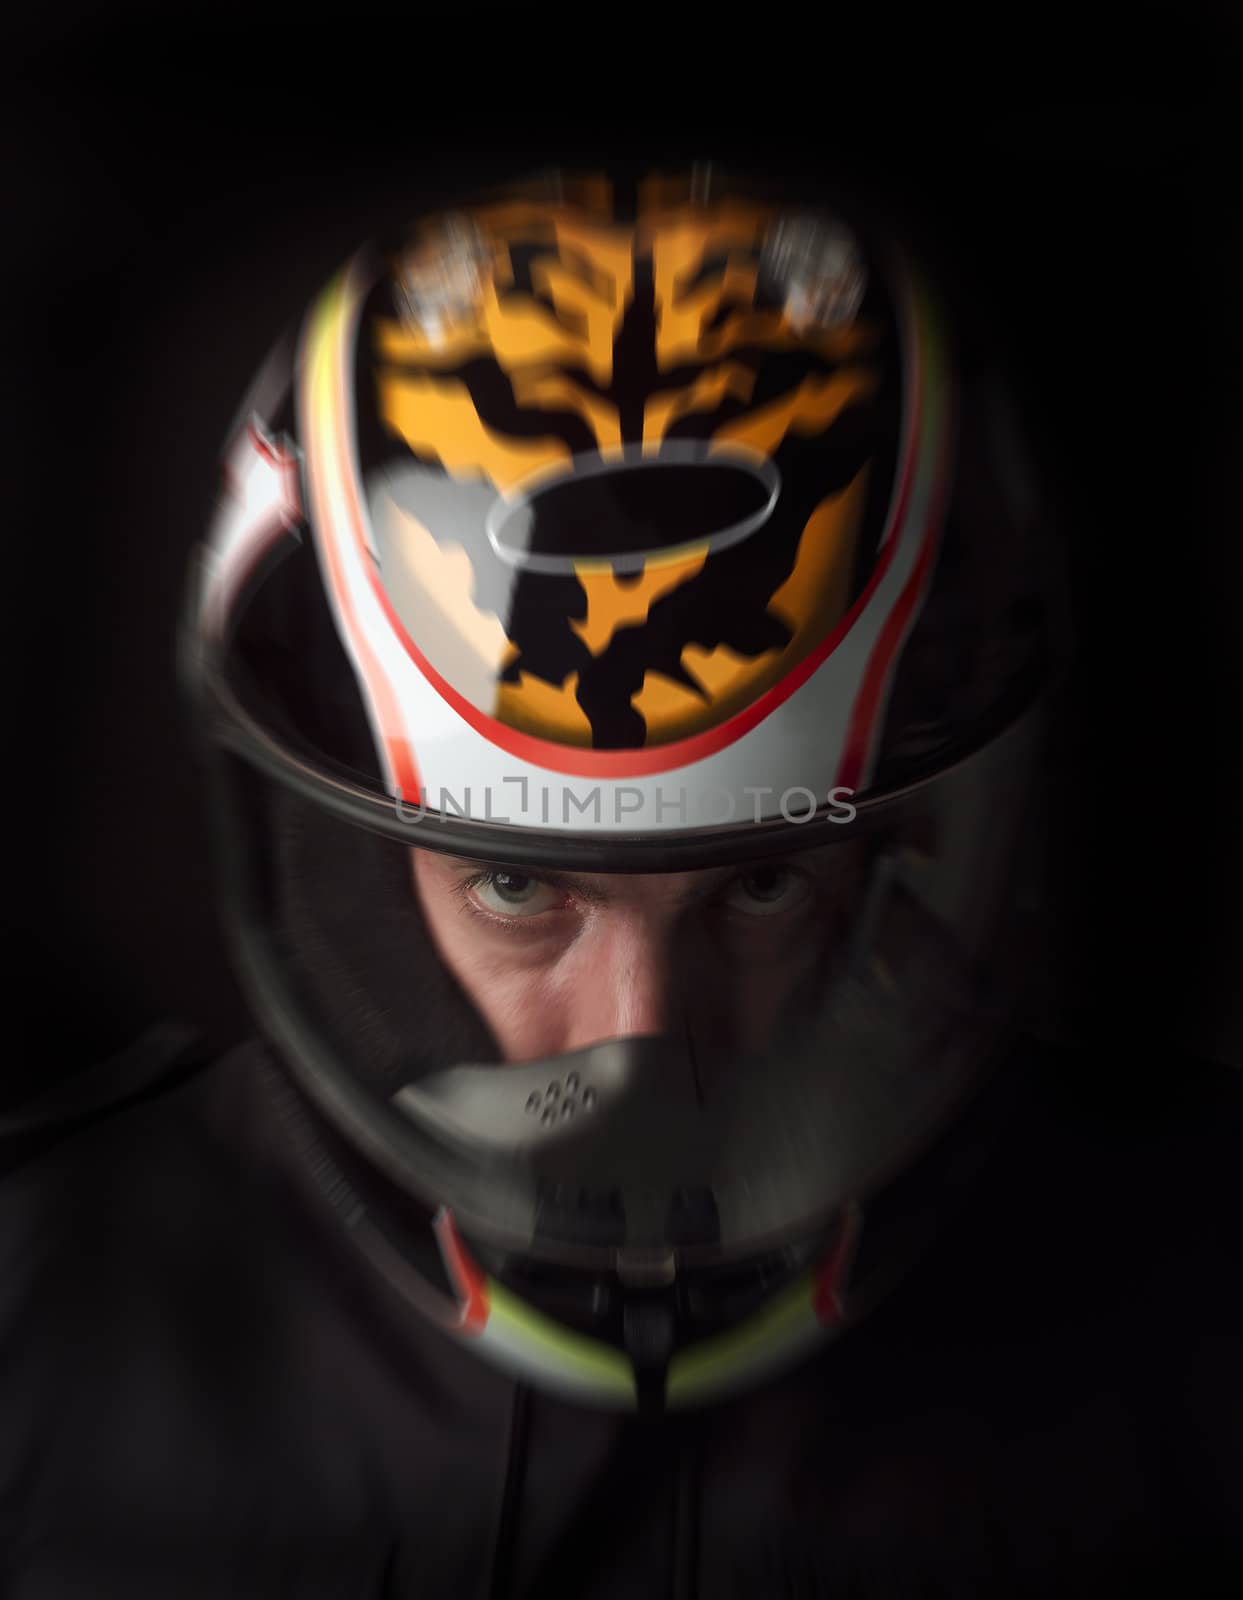 Man with motorcycle helmet on black background